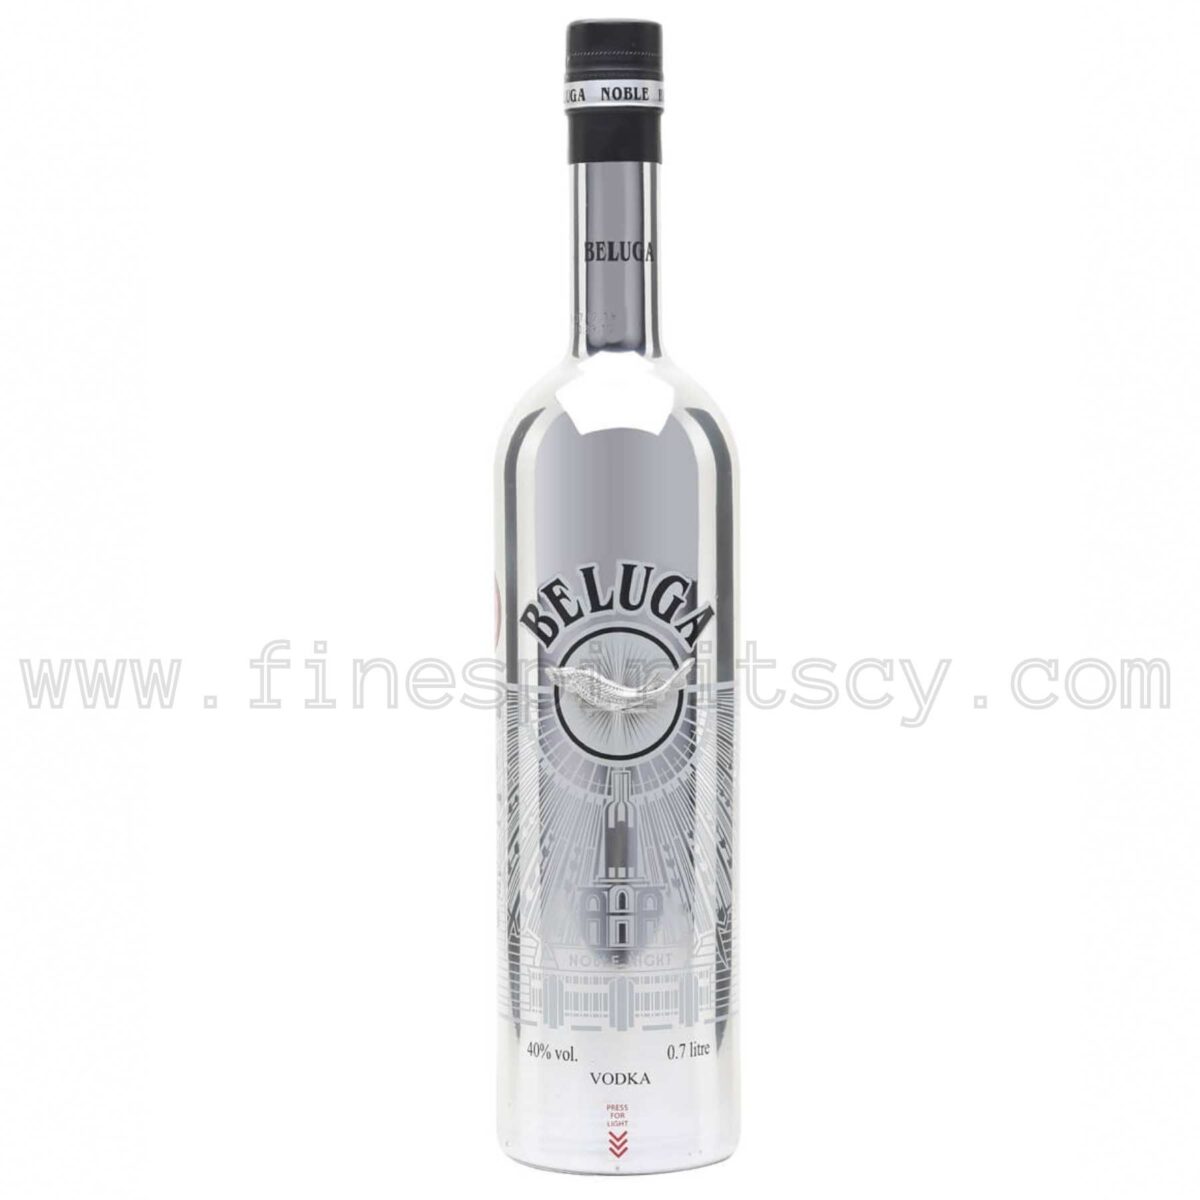 Beluga Noble Vodka Night Edition 700ml 70cl 0.7L Order Shop Buy Online CY